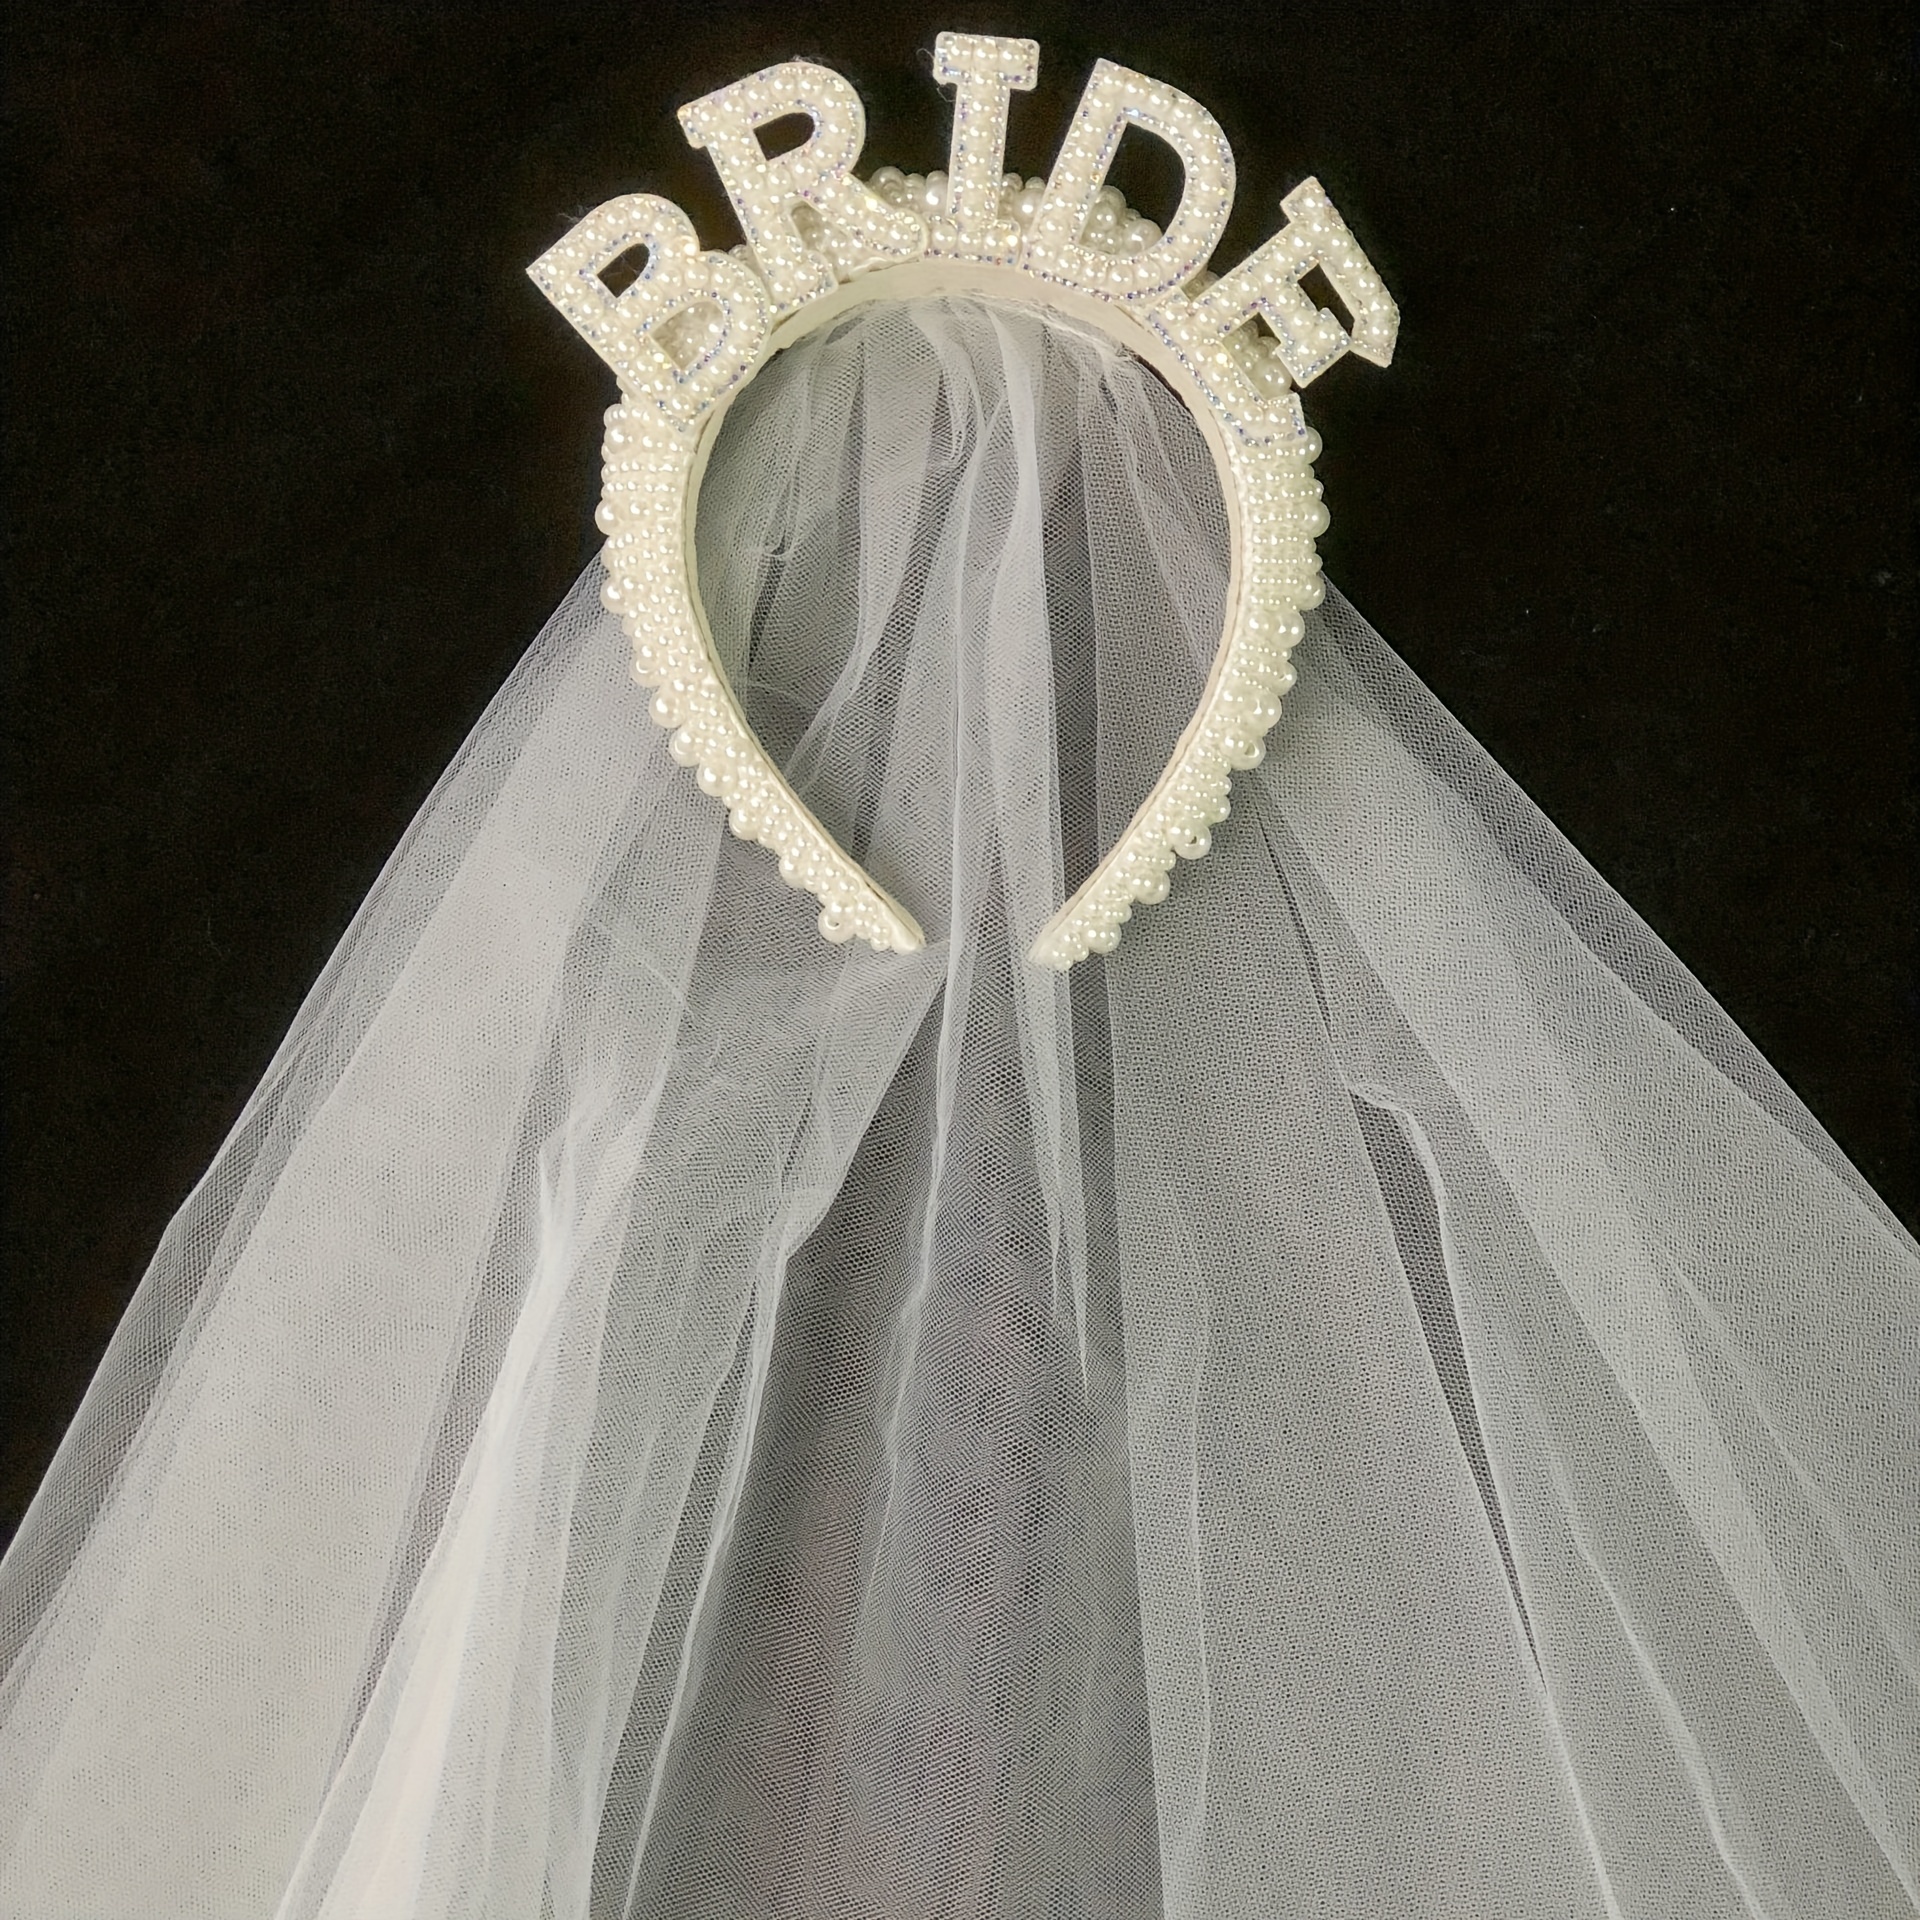 1 Piece Bachelorette Party Veil Decoration,Bridal Gift Headband Decoration,Bridal  Shower,Wedding